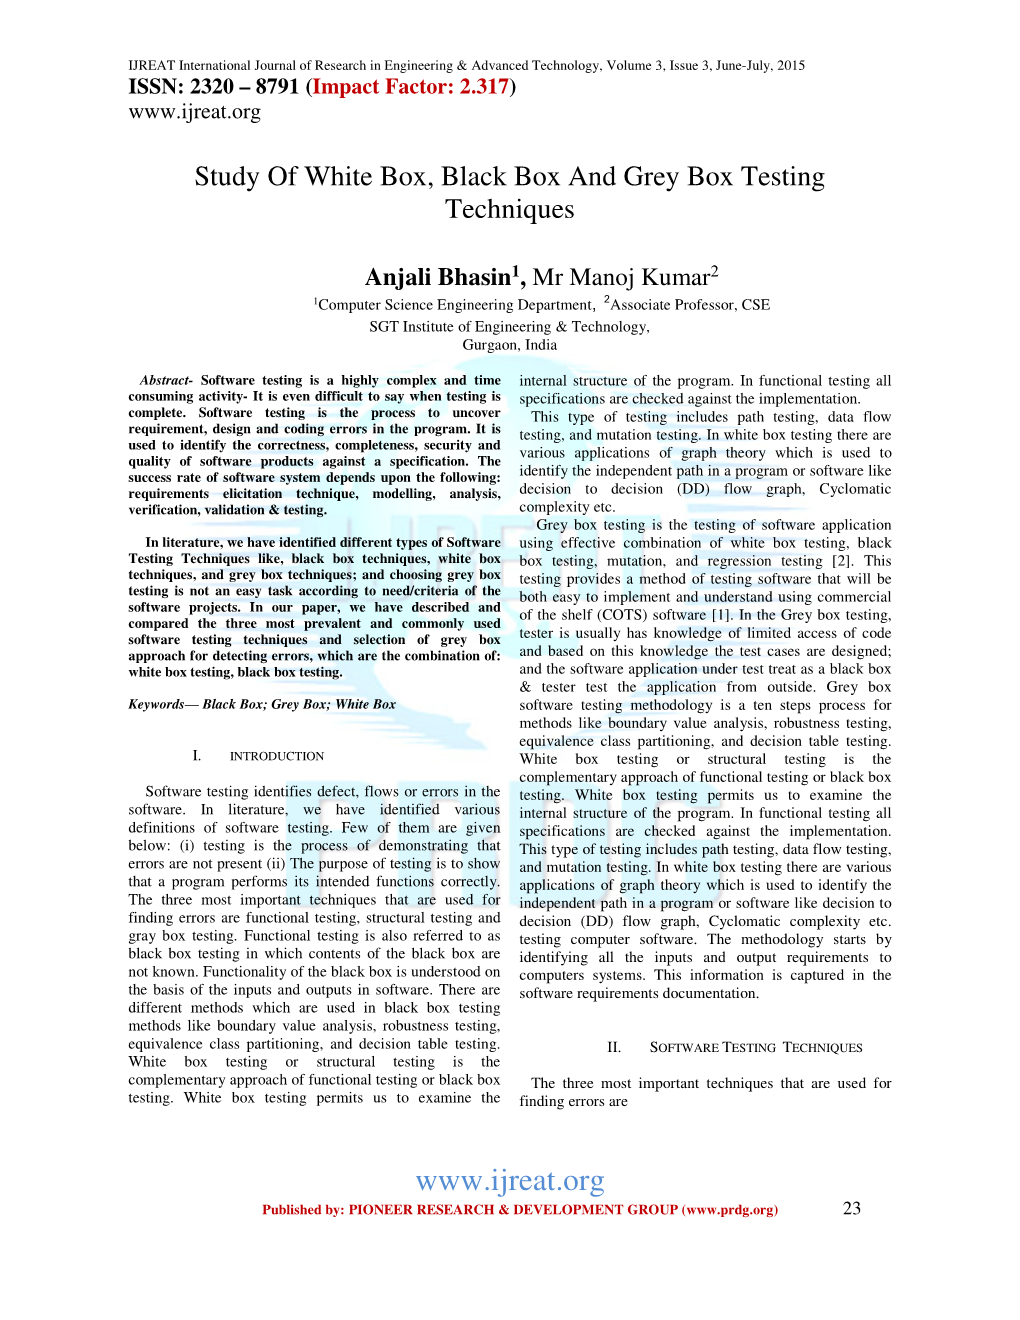 Study of White Box, Black Box and Grey Box Testing Techniques